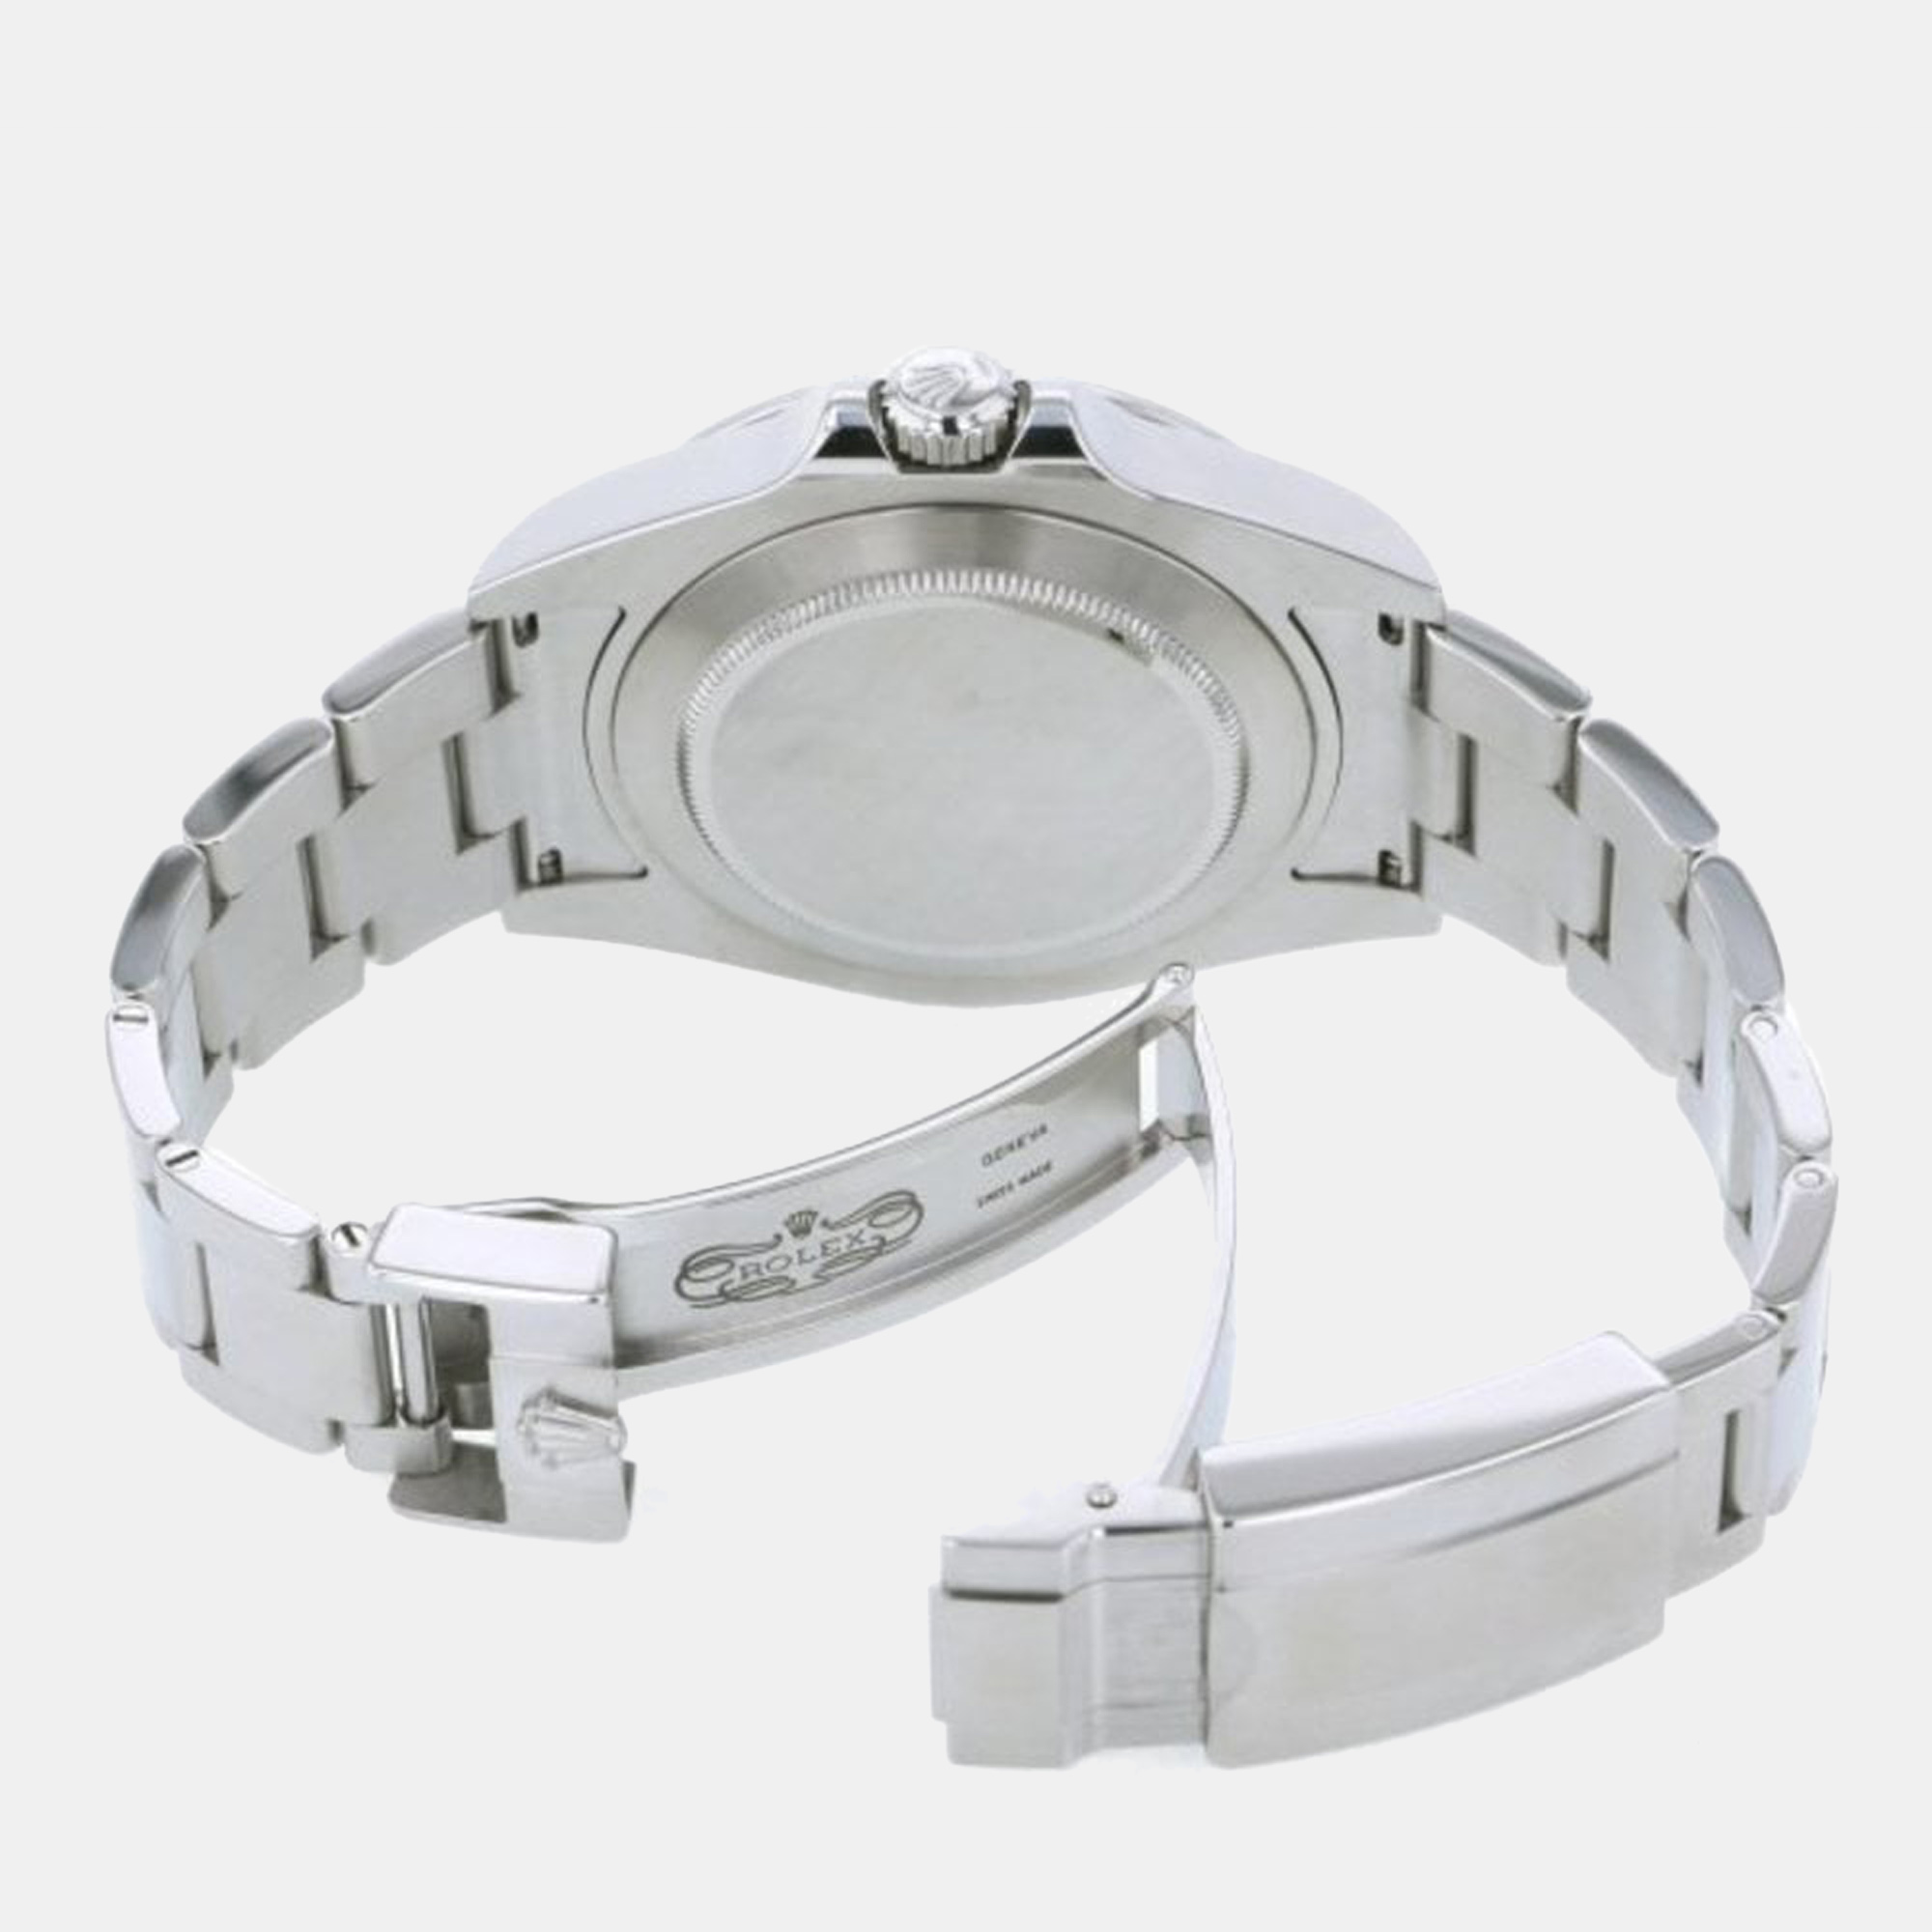 Rolex Black Stainless Steel Explorer II 216570 Automatic Men's Wristwatch 40 Mm